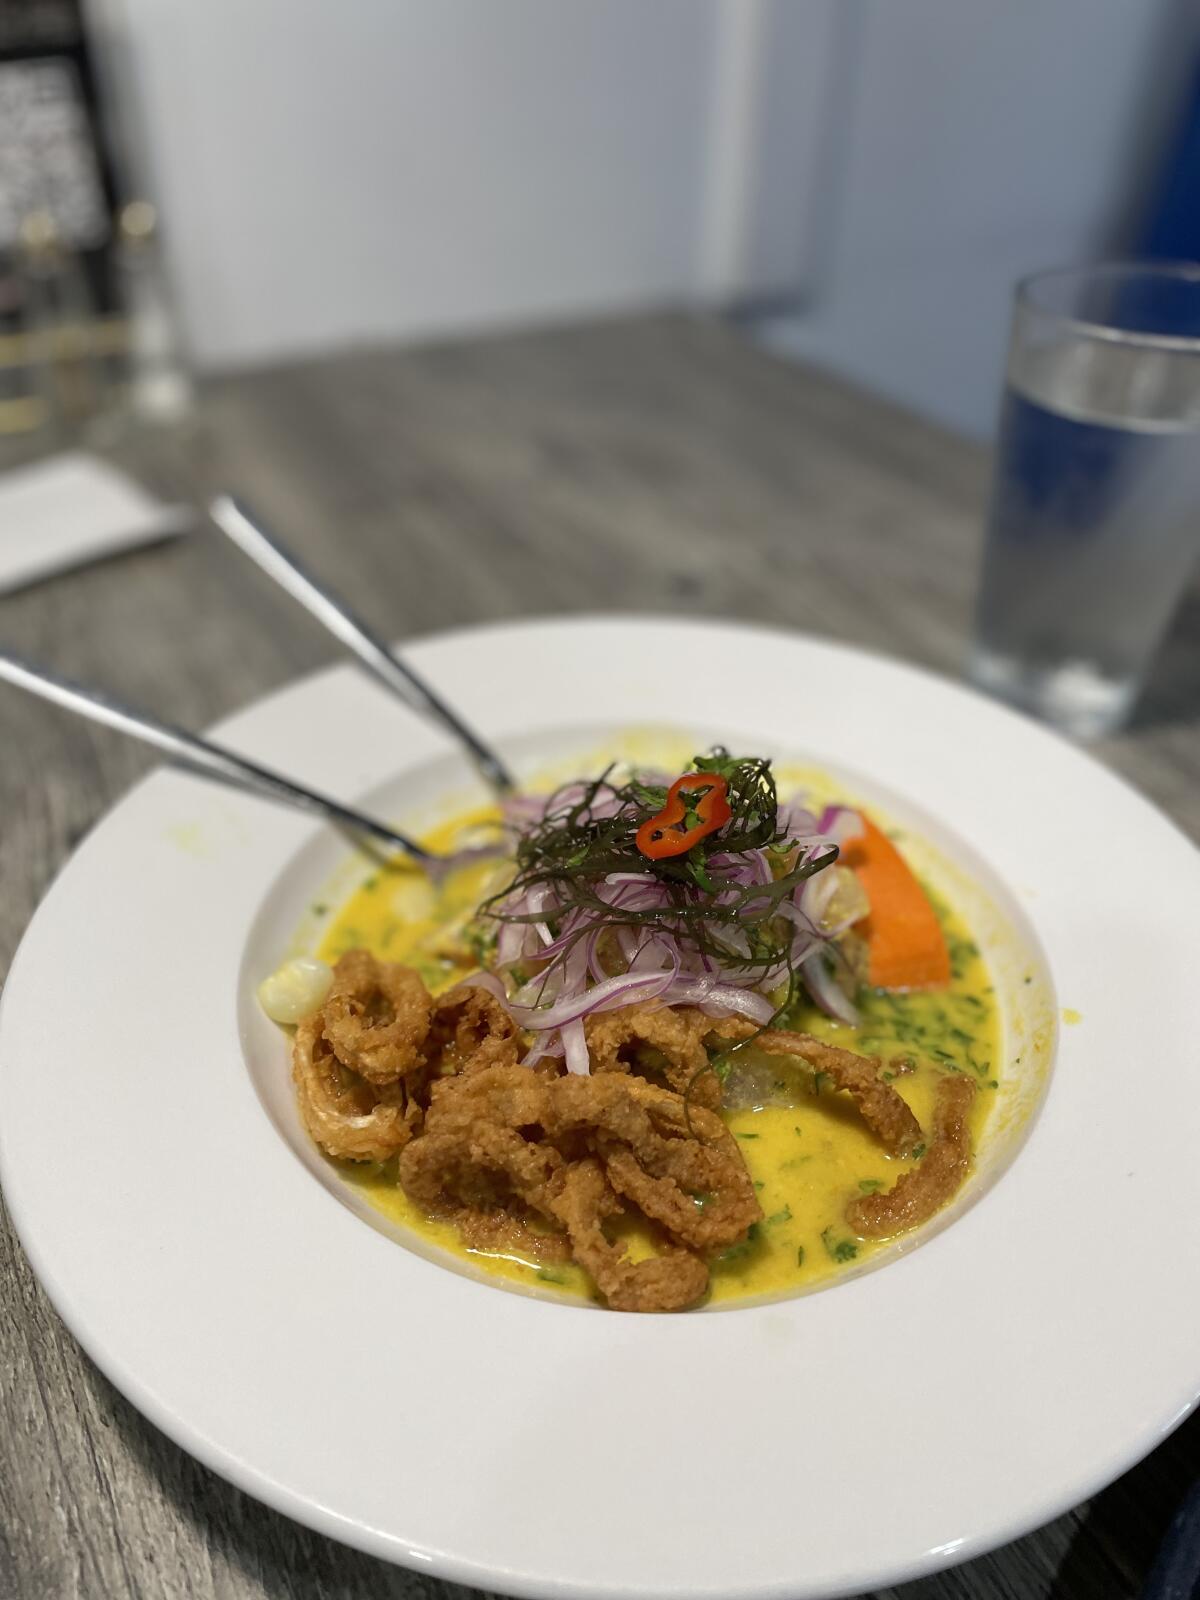 Fish, fried calamari, sweet potatoes and corn are featured in Ceviche 19’s Ceviche Merkado.